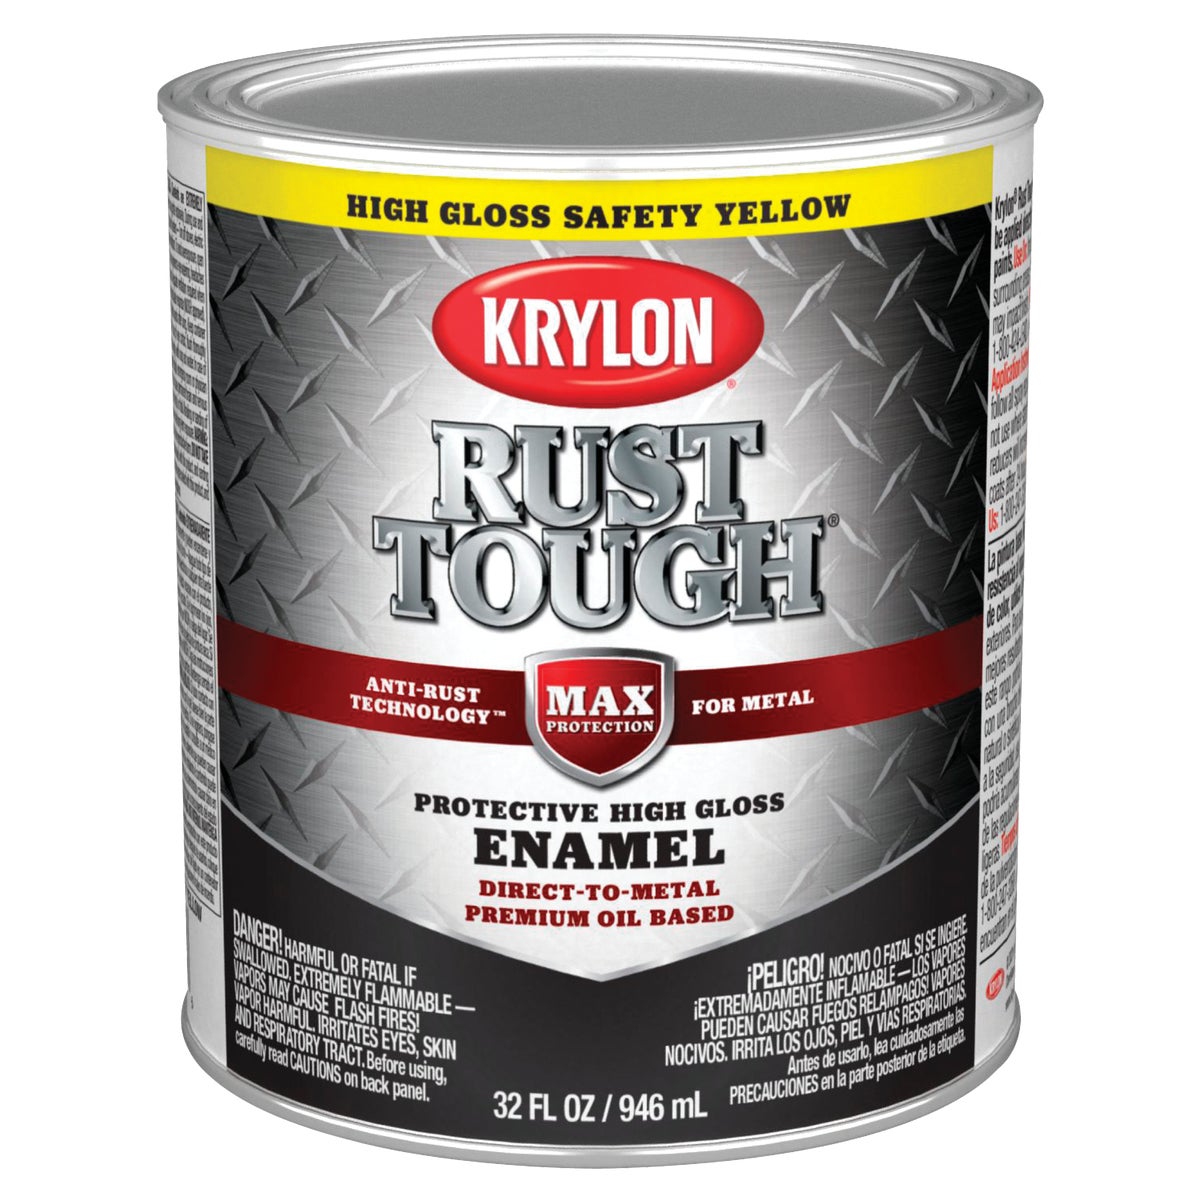 Item 787789, Krylon Rust Tough with Anti-Rust Technology provides premium protection 